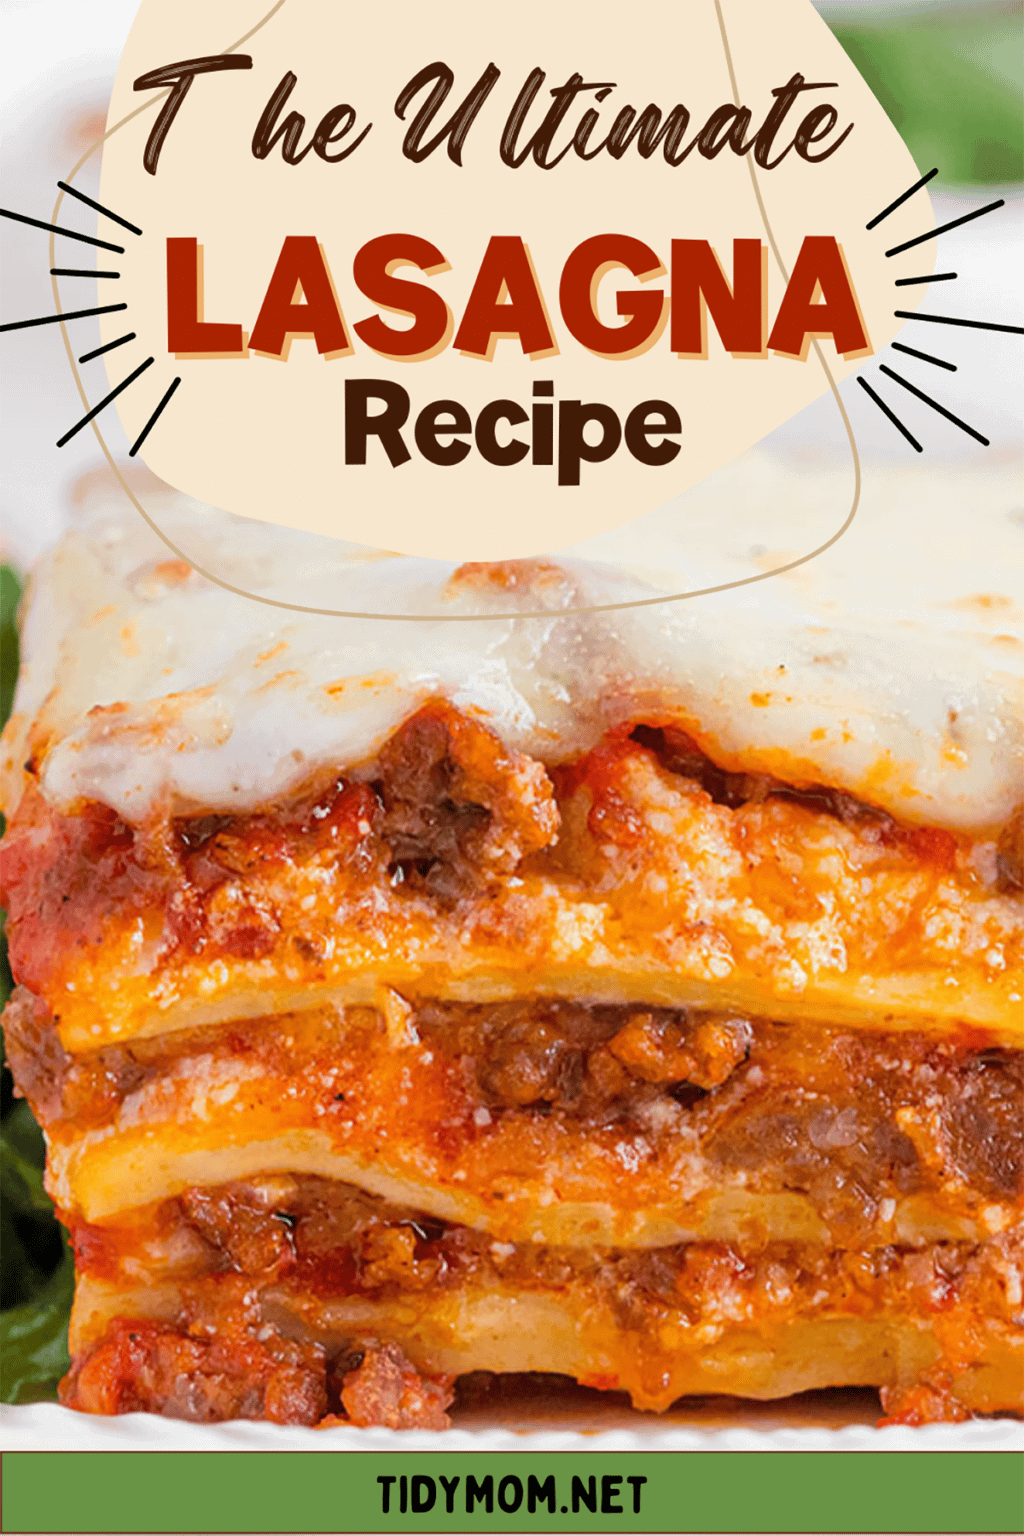 The Best Homemade Lasagna Recipe {VIDEO} - TidyMom®